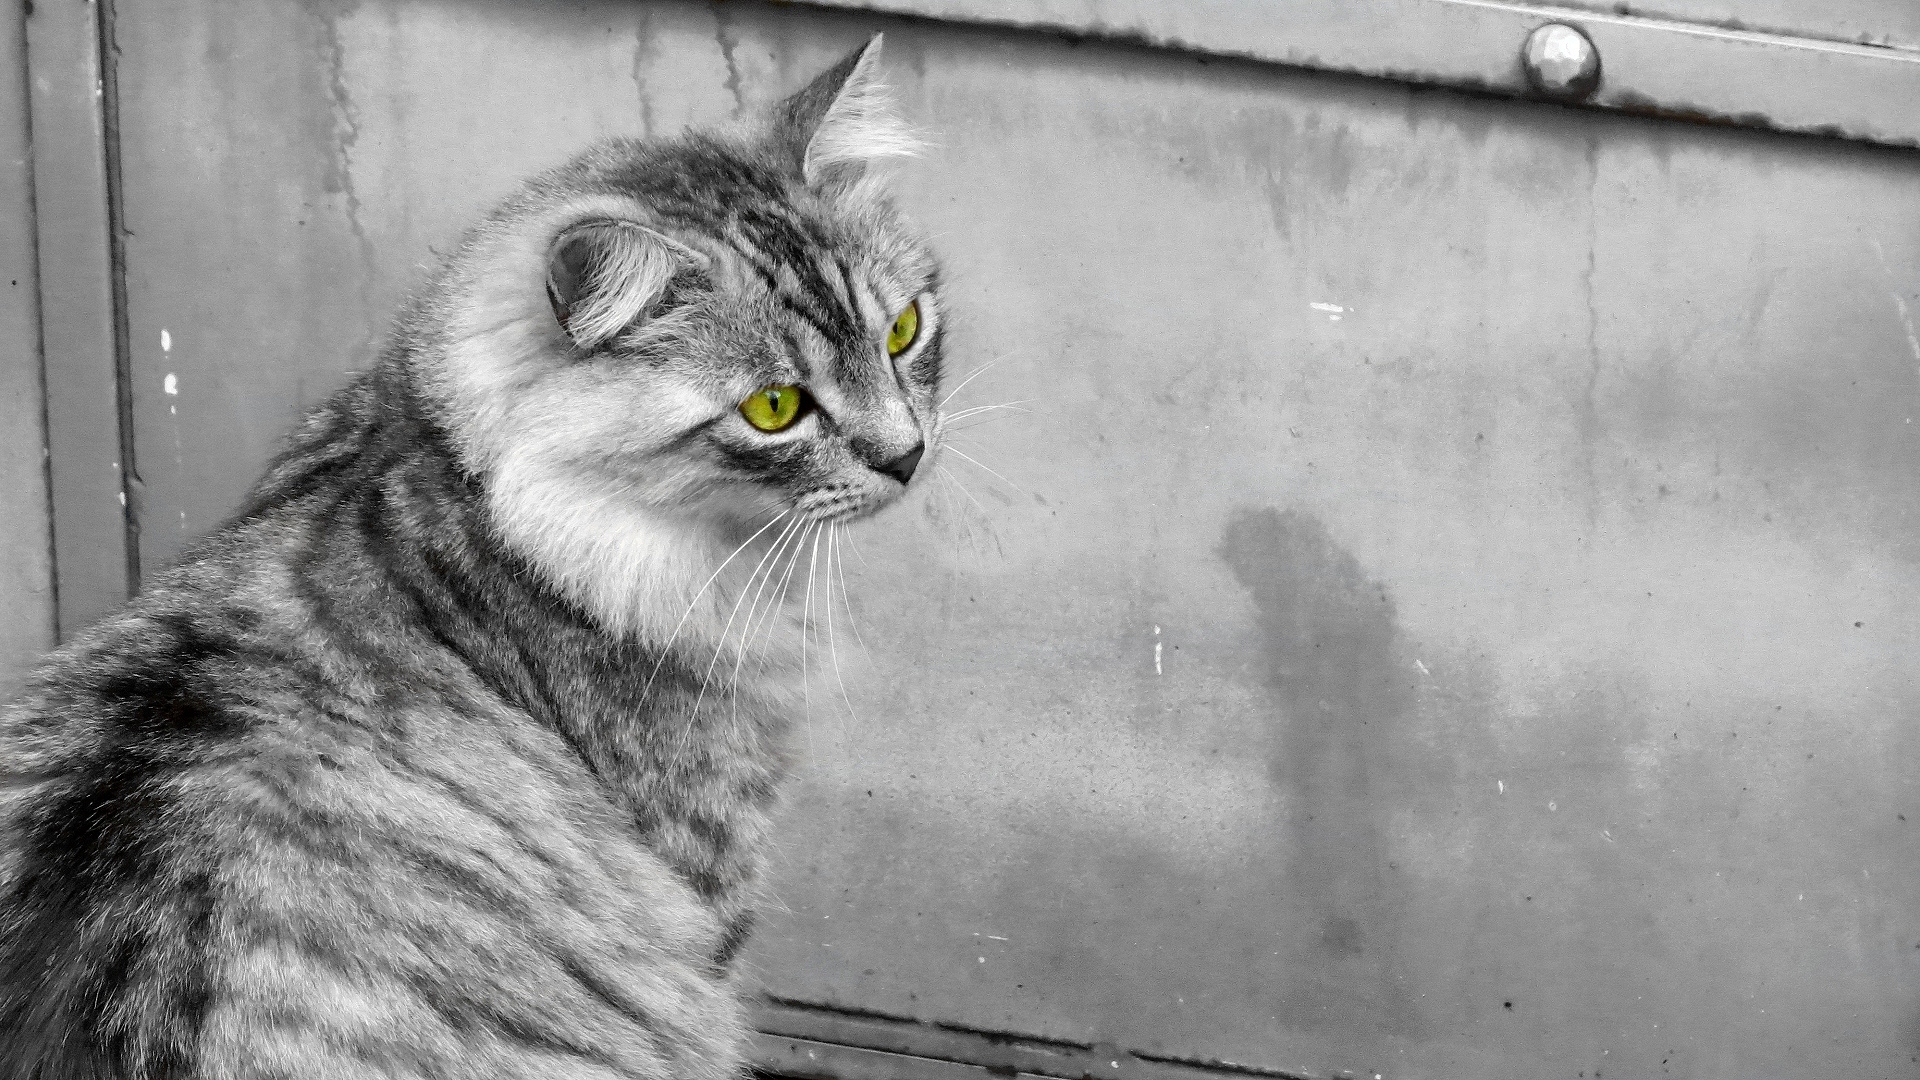 Bakgrundsbilder Katter ser Djur 1920x1080 katt tamkatt Blick